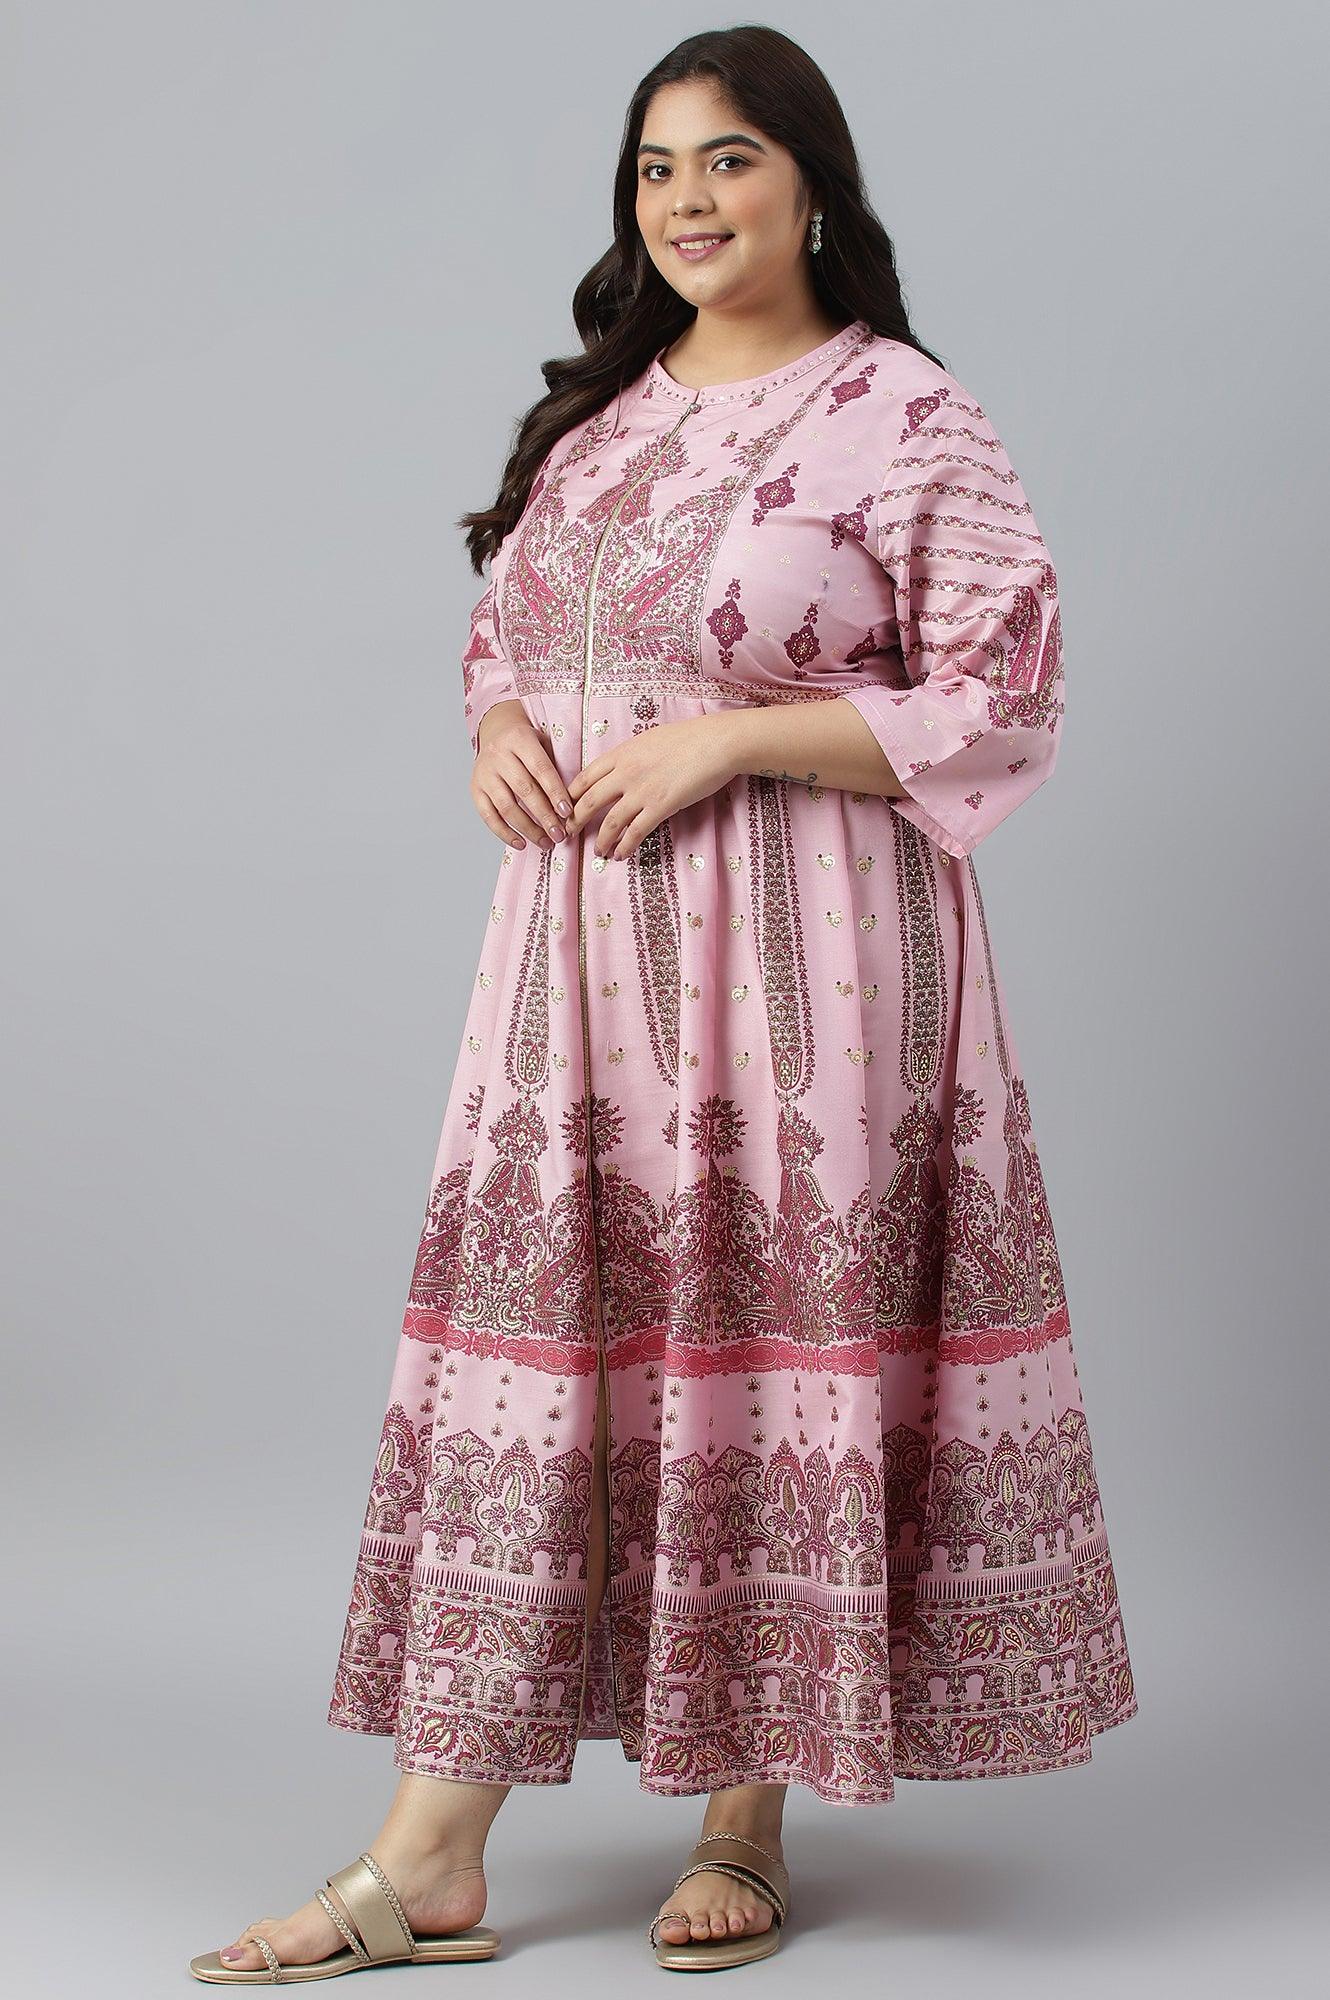 Plus Size Cameo Pink Floral Printed Festive Dress - wforwoman